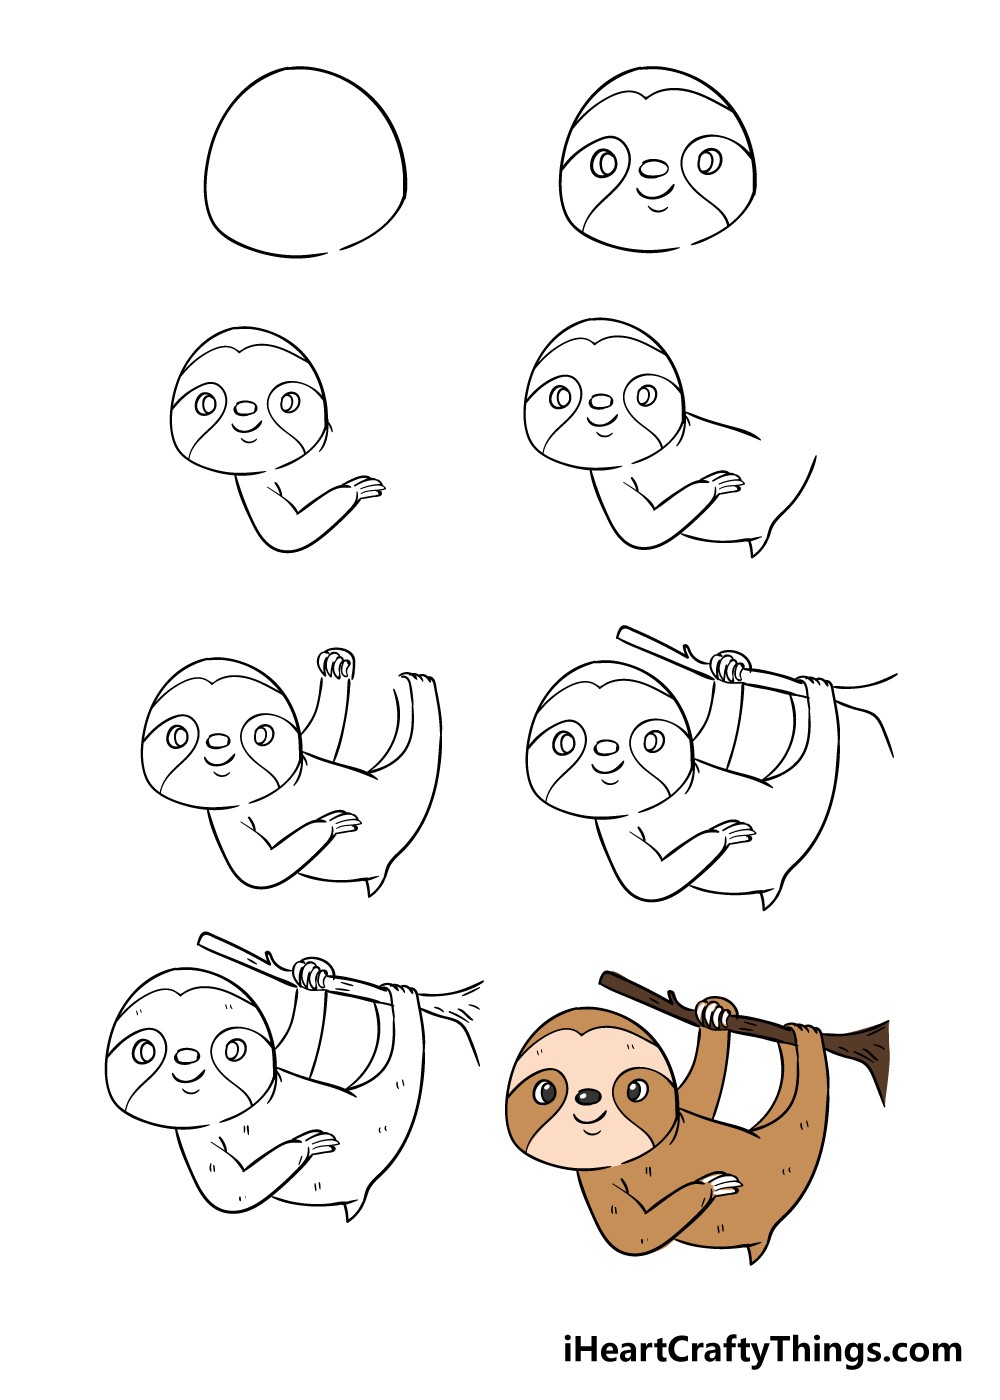 A cute Sloth Drawing Ideas